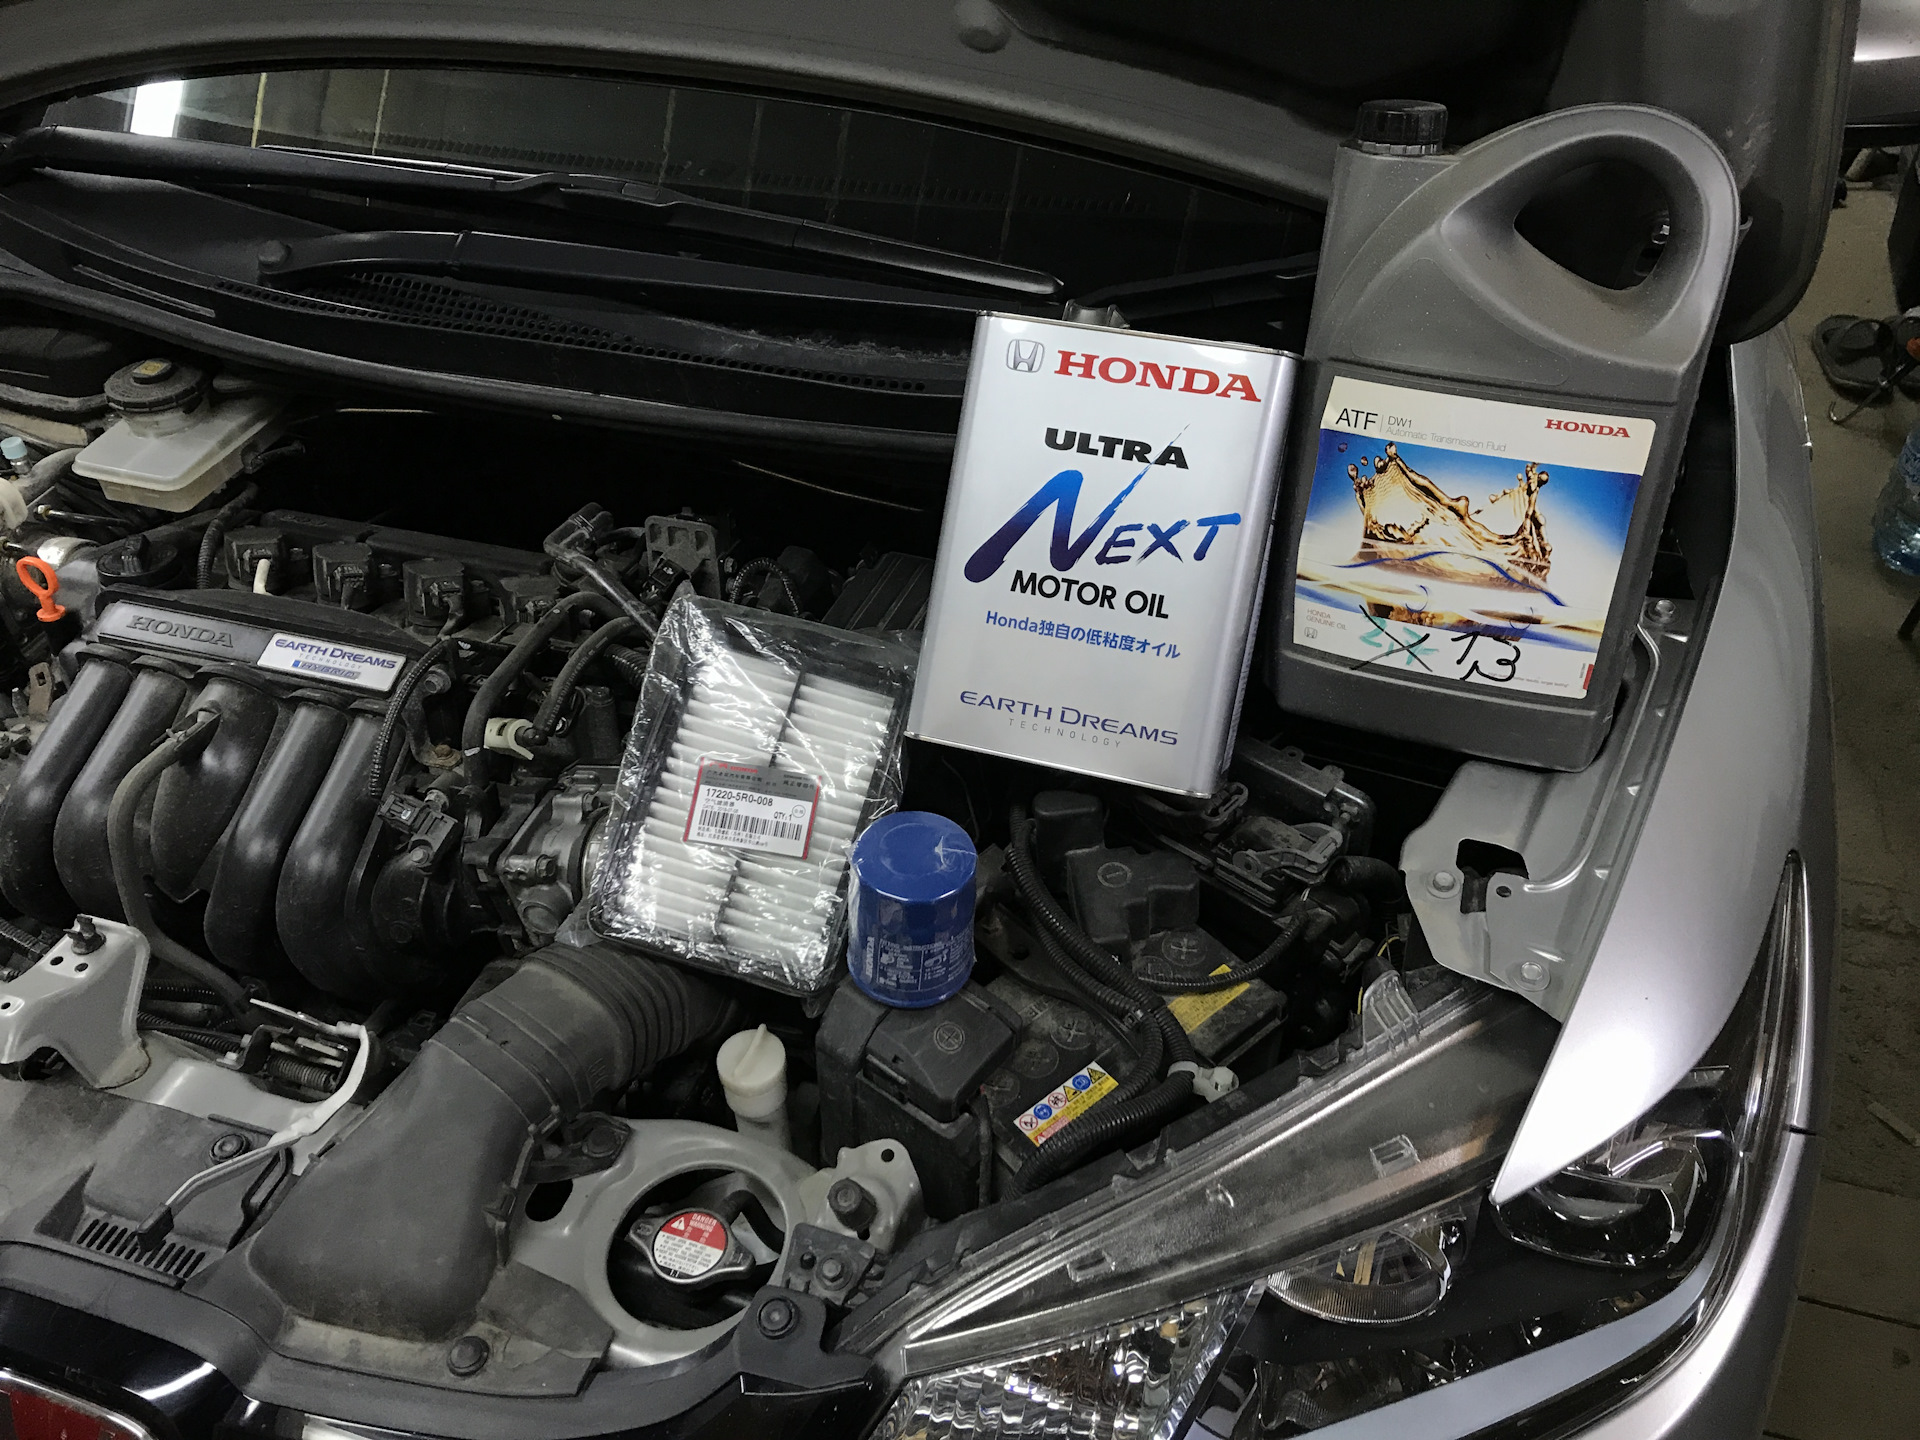 Honda vezel масло. Honda Fit Hybrid 2011 Battery. Honda Fit гибрид масло. Масло моторное для Хонда фит 1,5 гибрид. Фильтр масляный Honda Fit gp5.